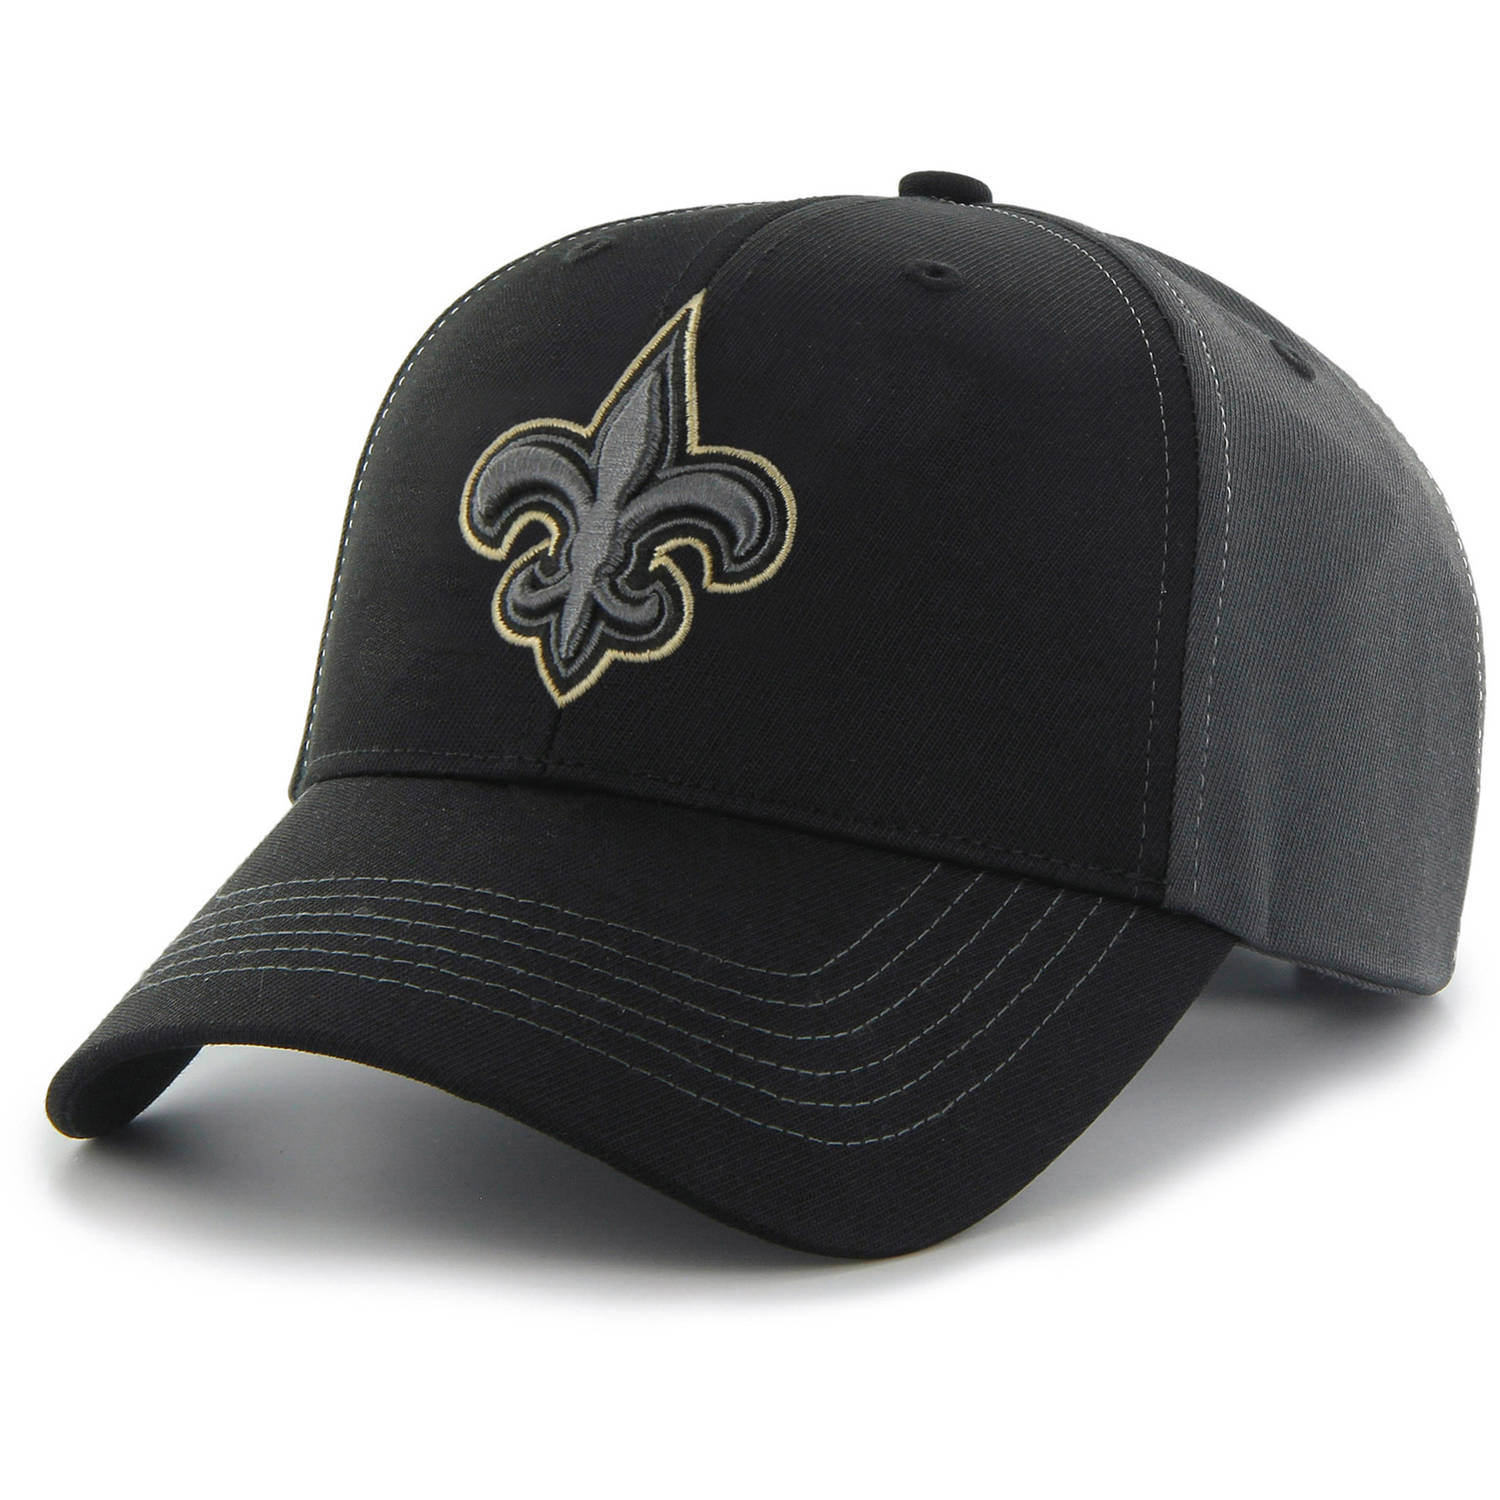 NFL New Orleans Saints Mass Blackball Cap - Fan Favorite - image 1 of 2